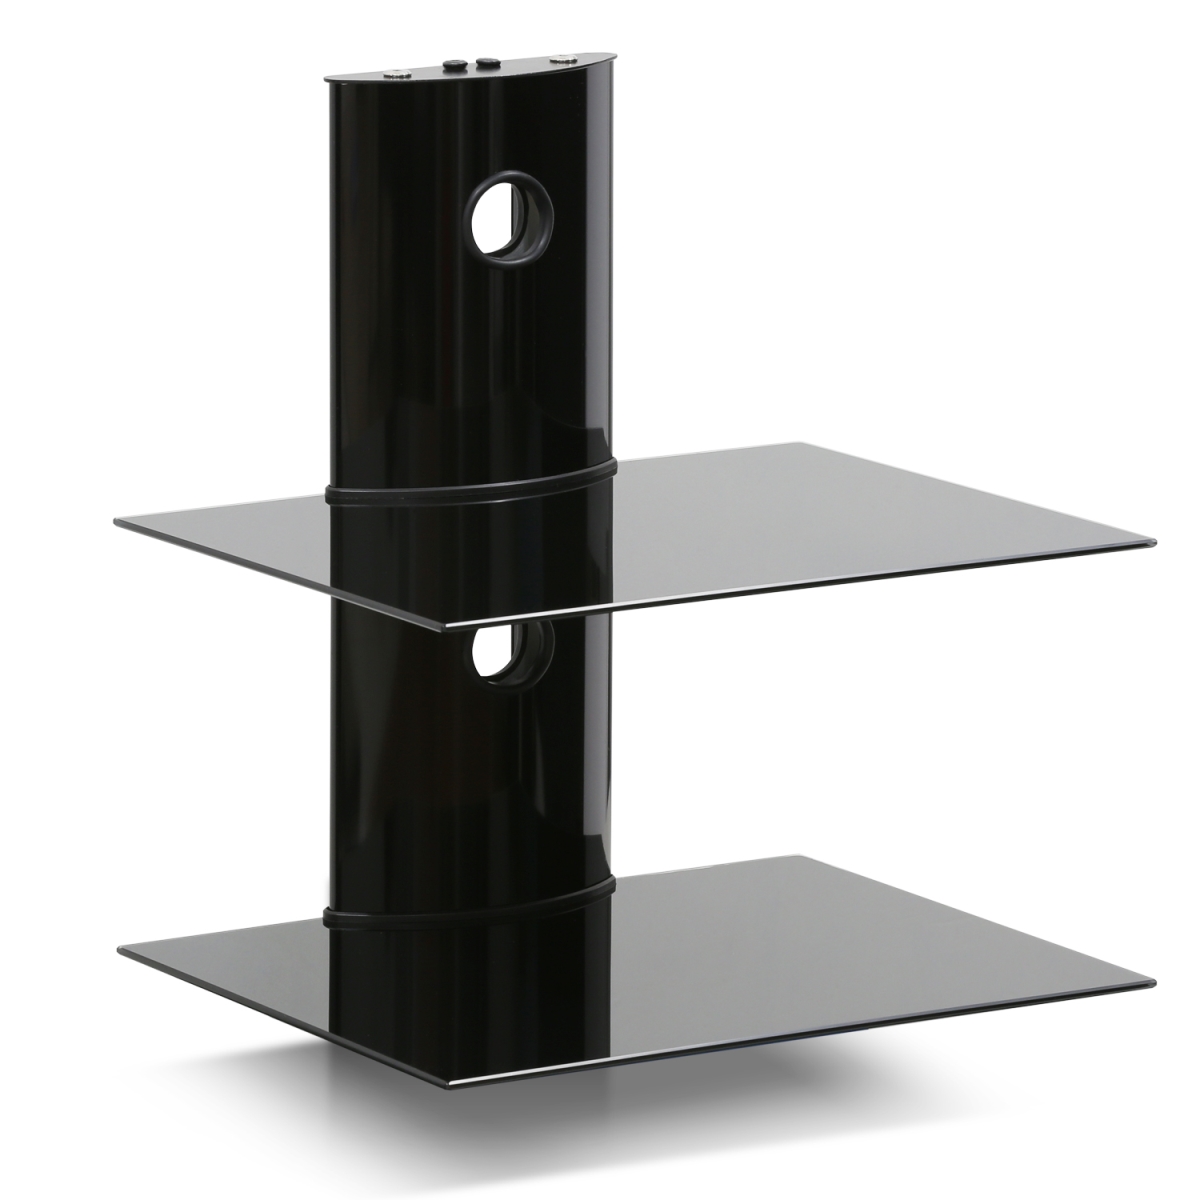 Frl001bk Modern 2-tier Floating Wall Shelf For Media Accessories, Black